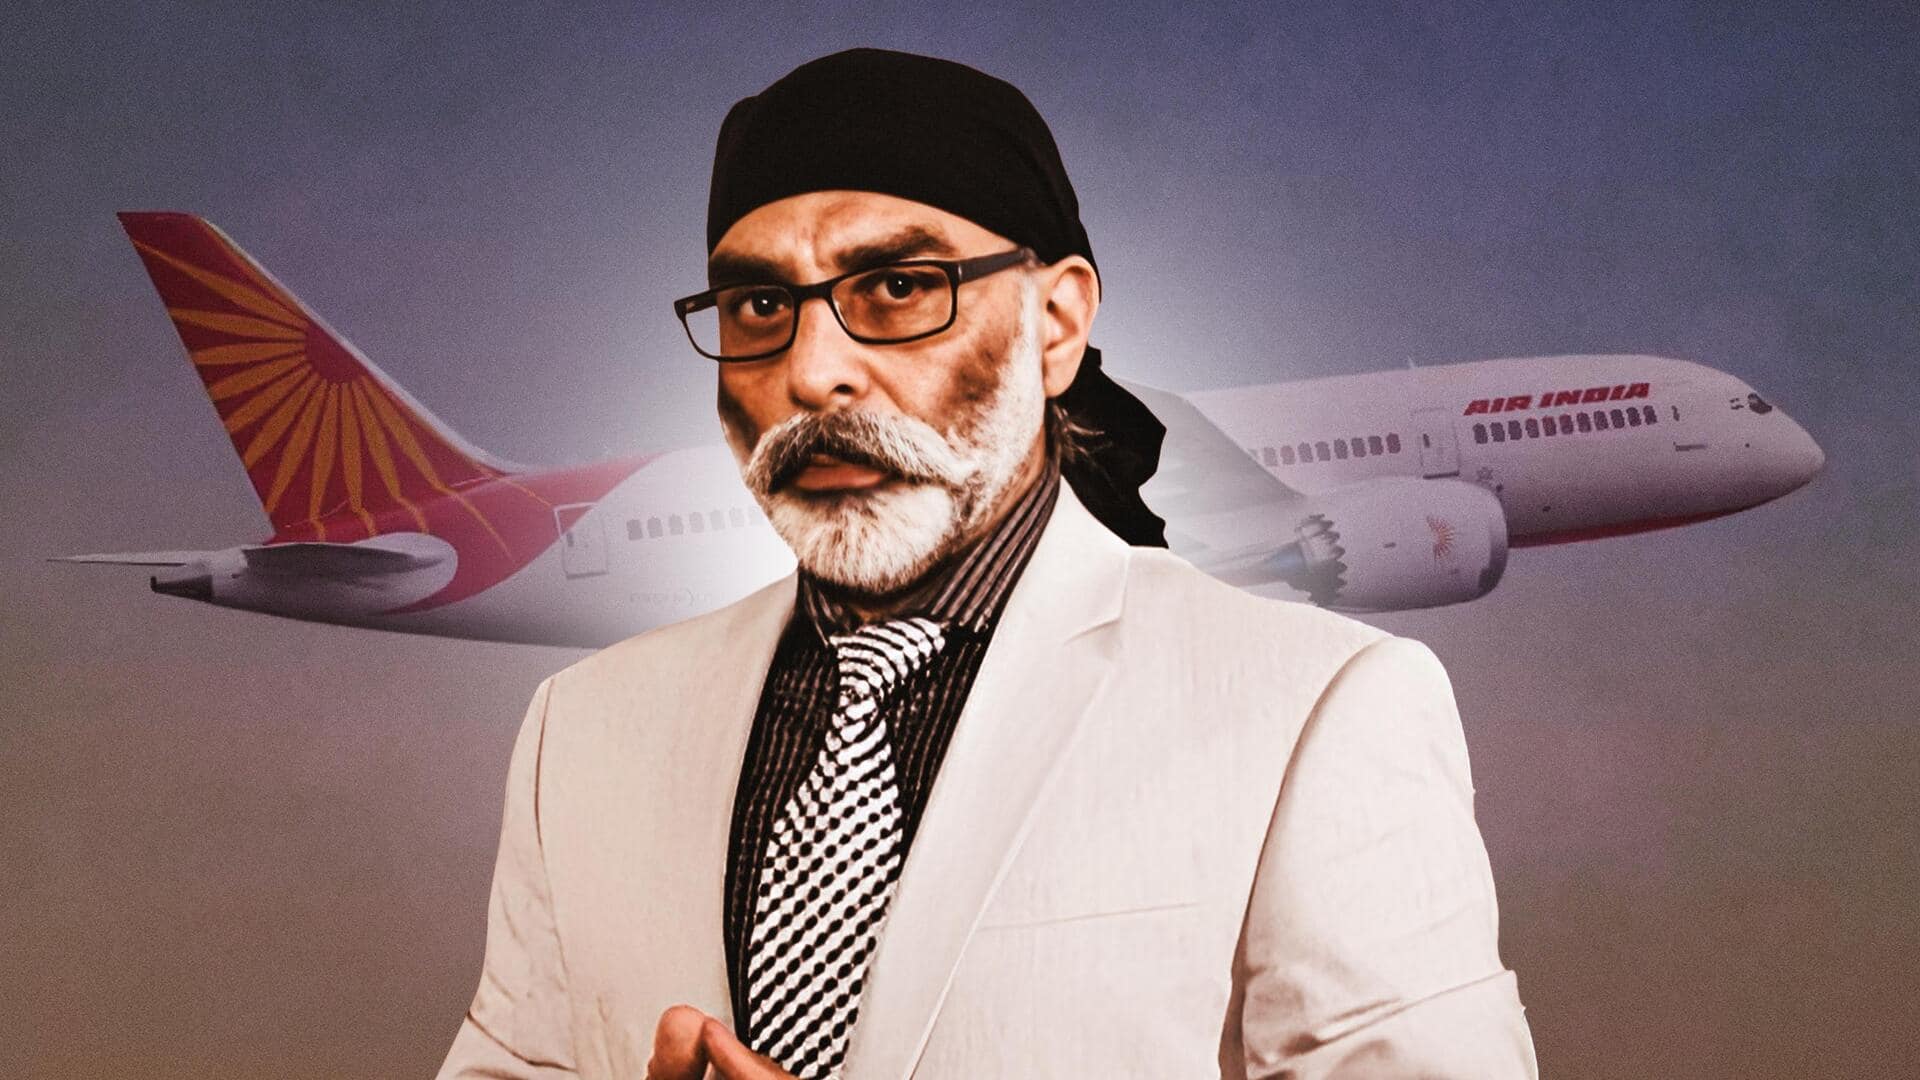 Pannun's threat to blow up Air India flight serious: Report